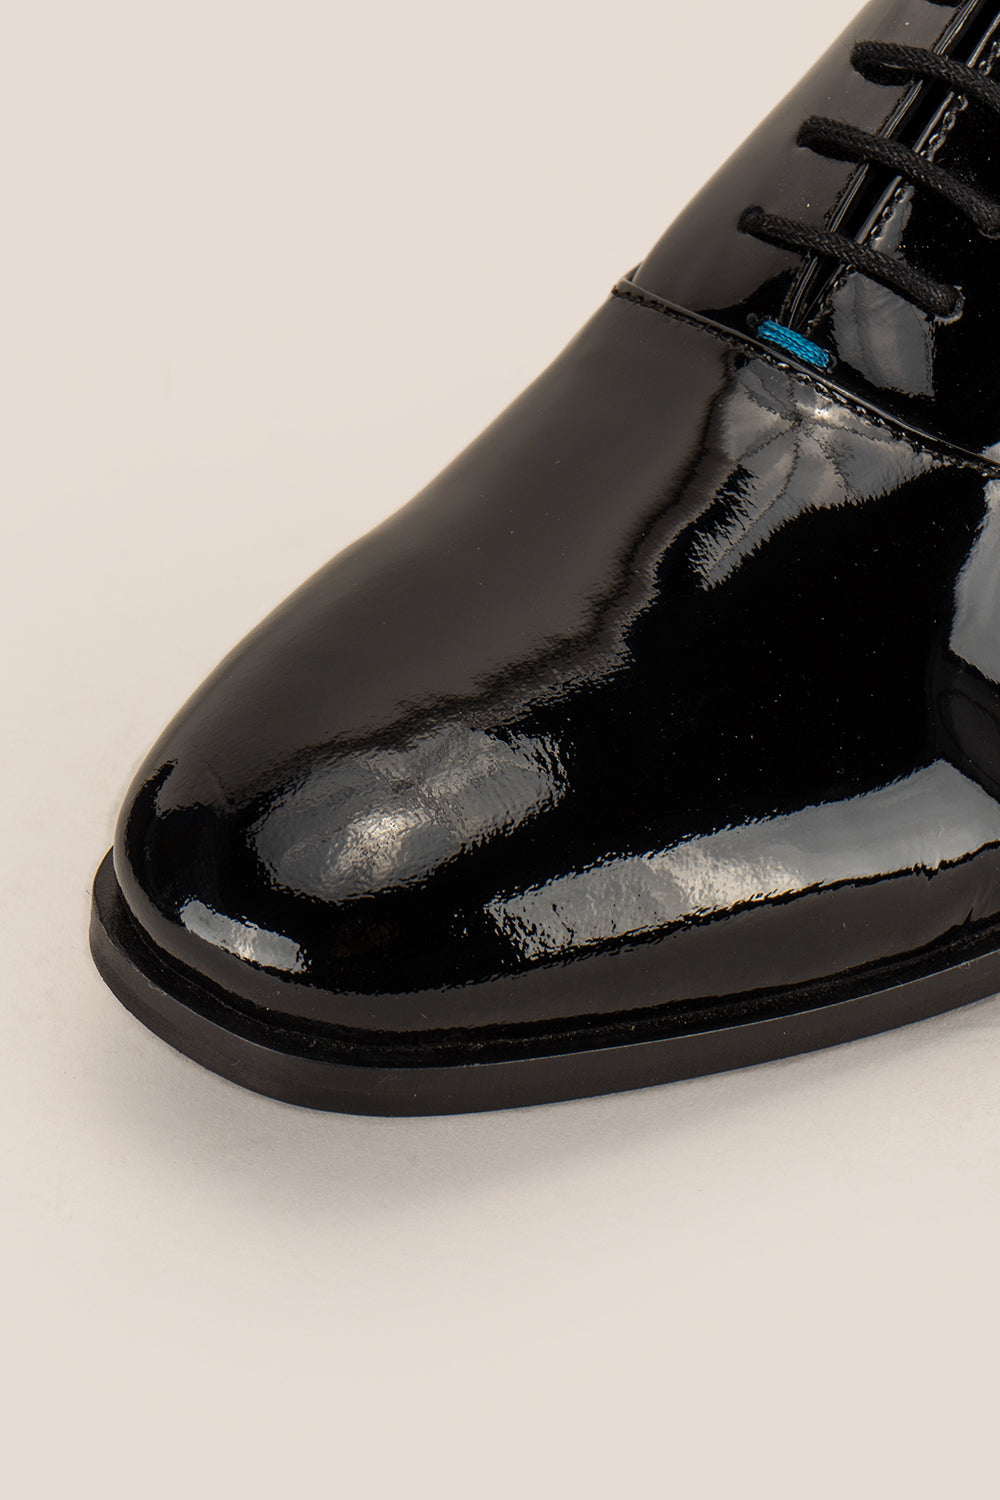 Duke Black Patent Leather Oxford Shoe | Oswin Hyde